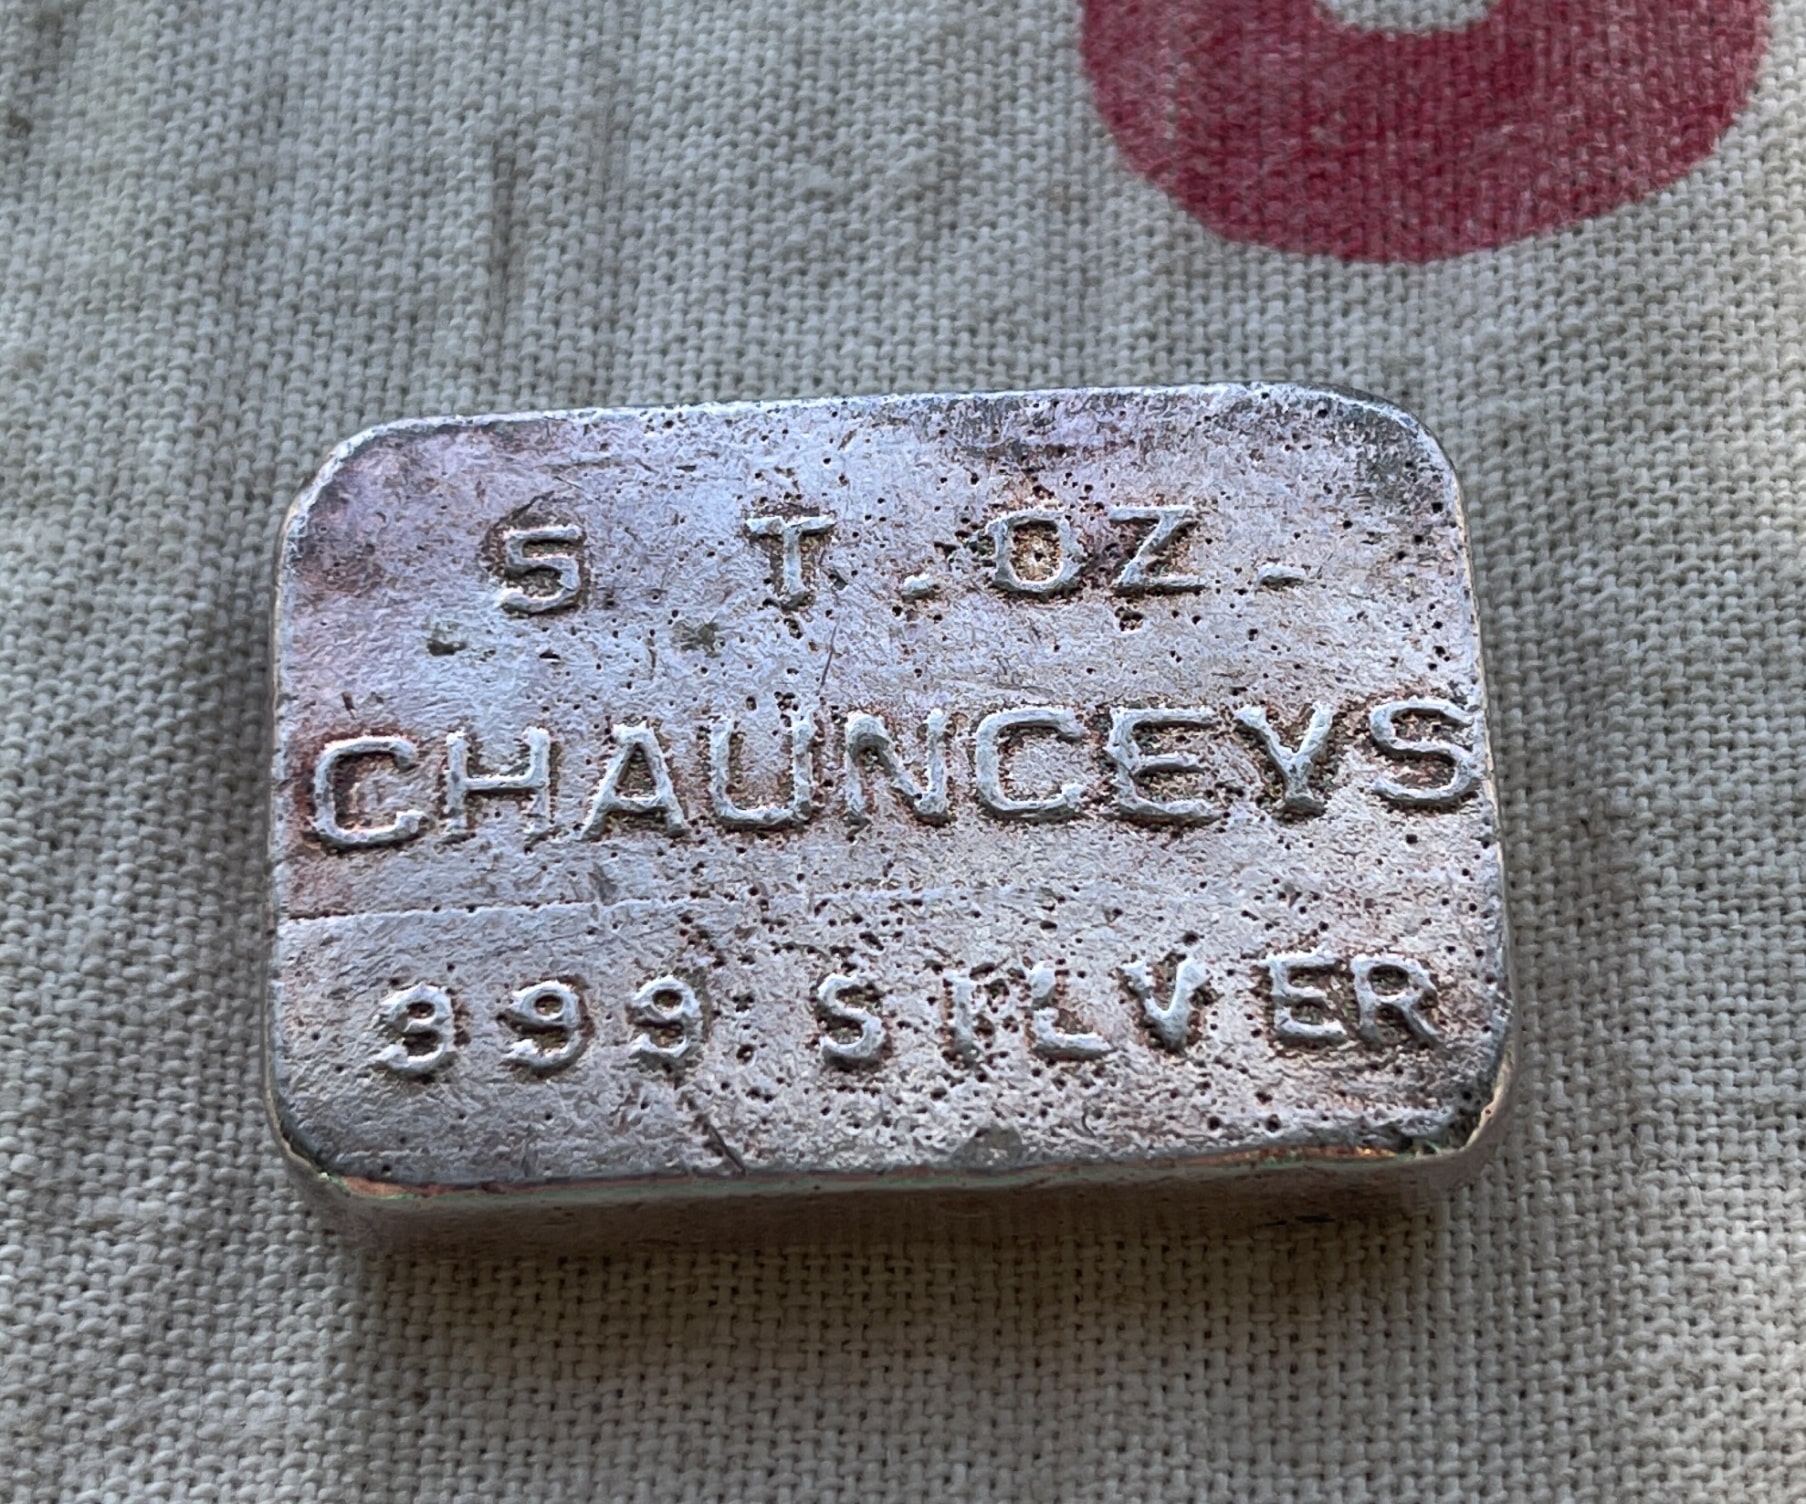 Chaunceys vintage silver hallmark